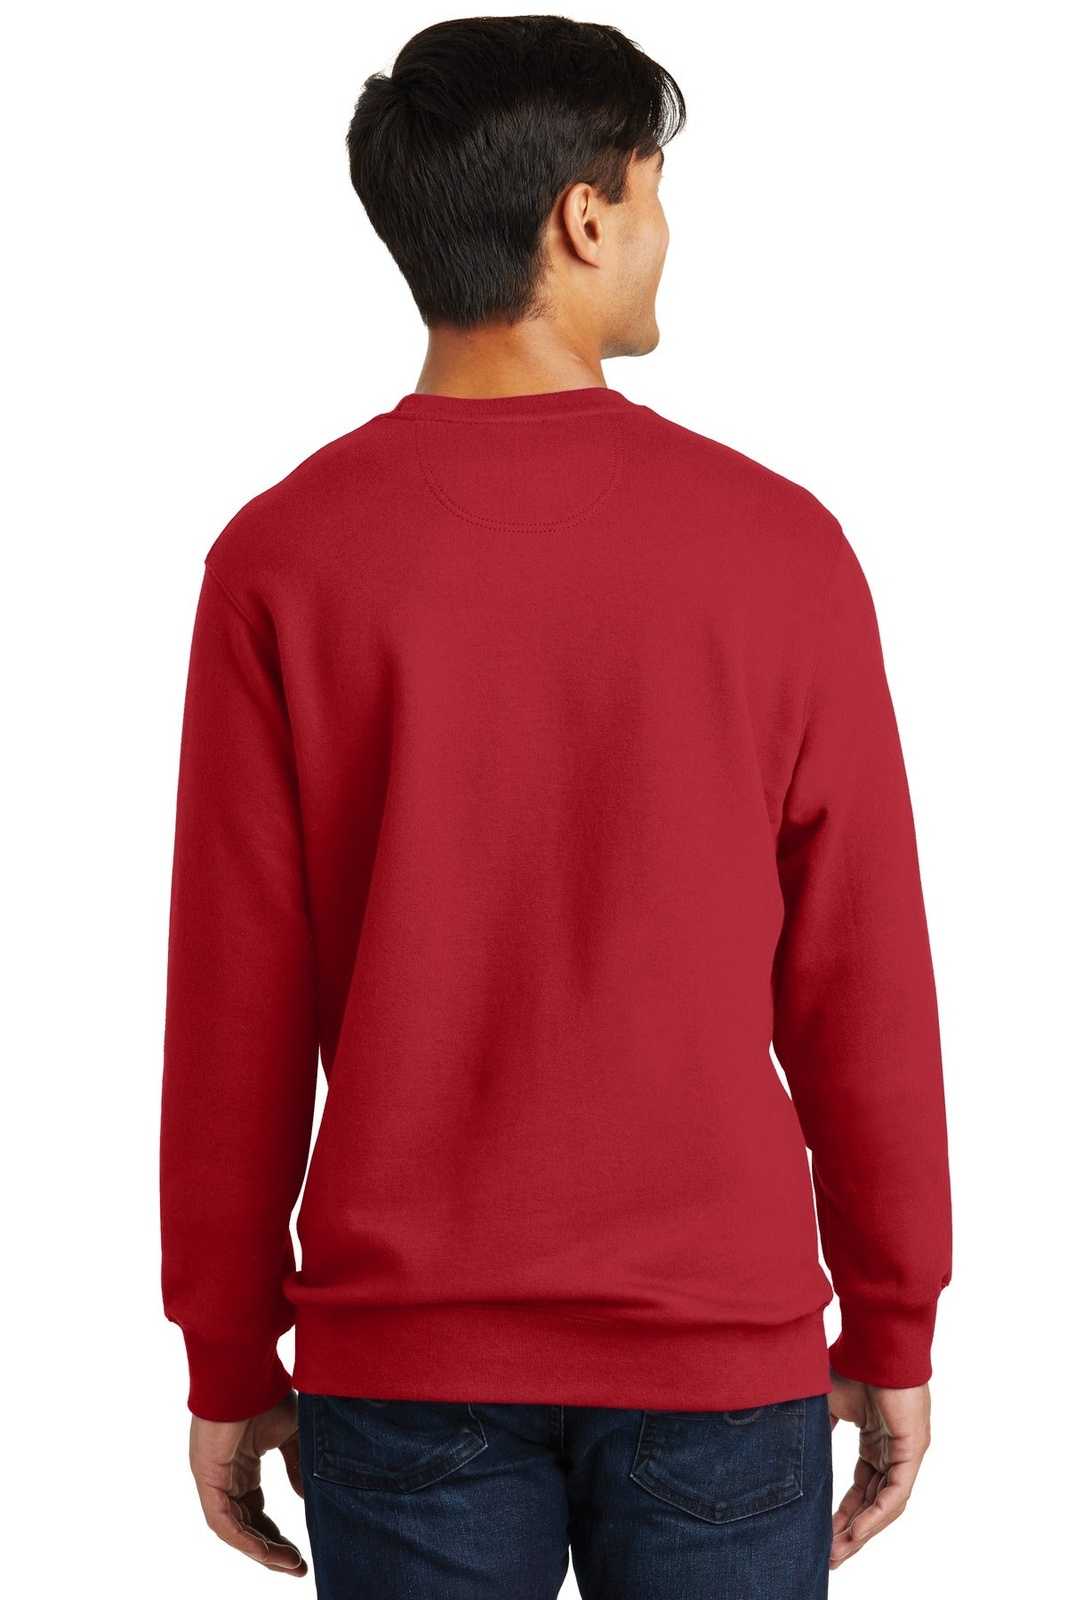 Port & Company PC850 Fan Favorite Fleece Crewneck Sweatshirt - Team Cardinal - HIT a Double - 1